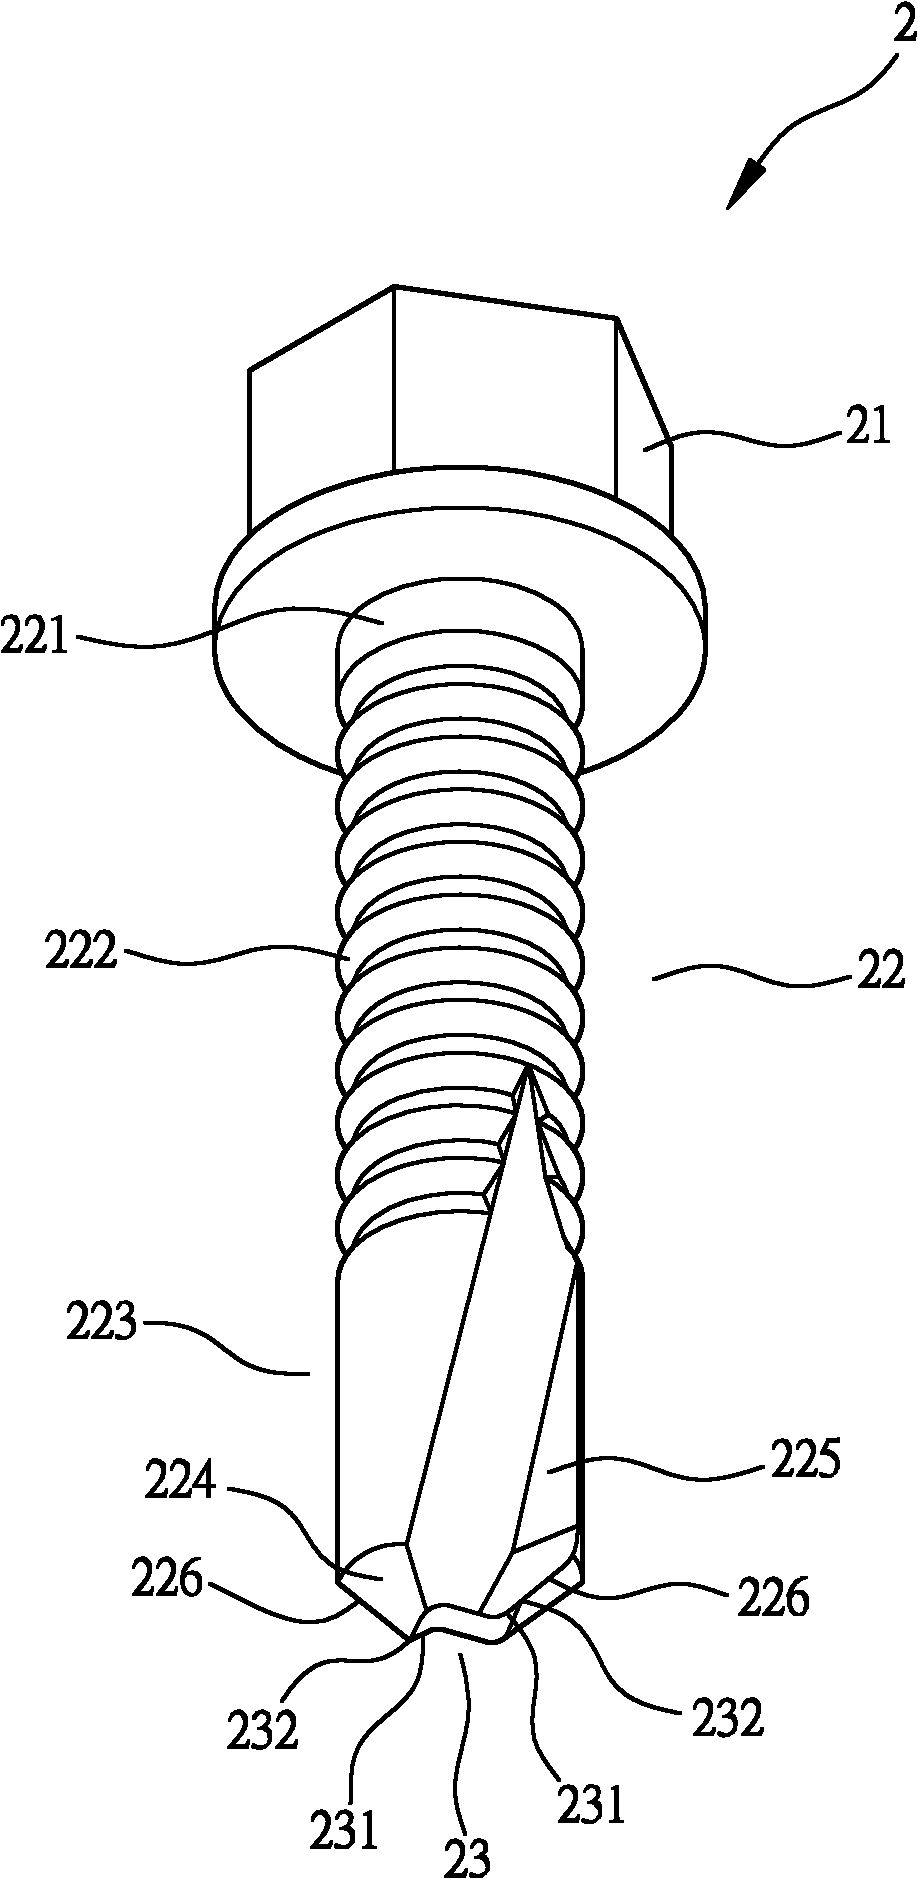 Self drilling screw structure